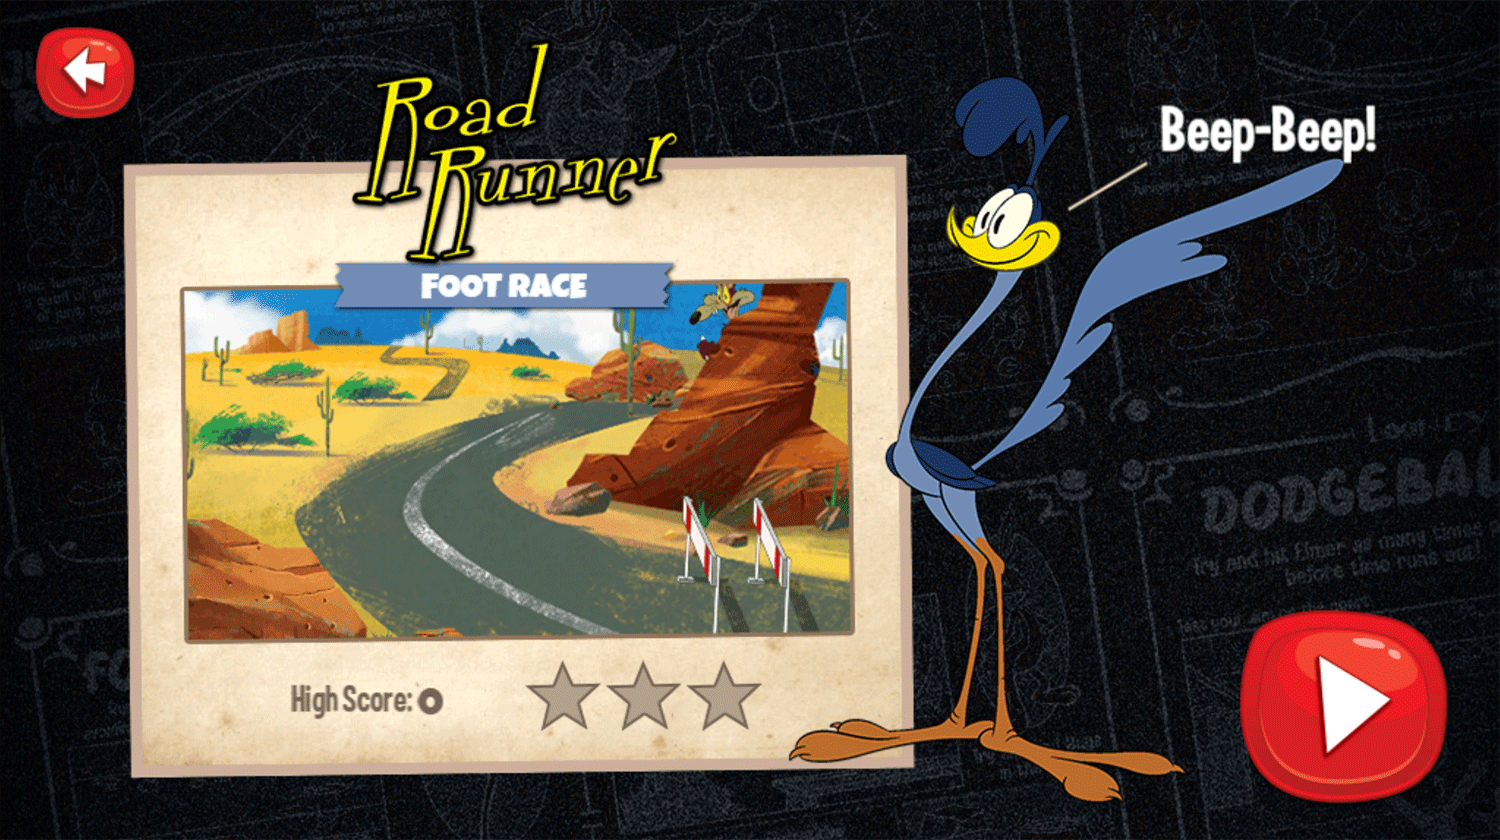 Looney Tunes Recess Road Runner Foot Race Game Welcome Screen Screenshot.